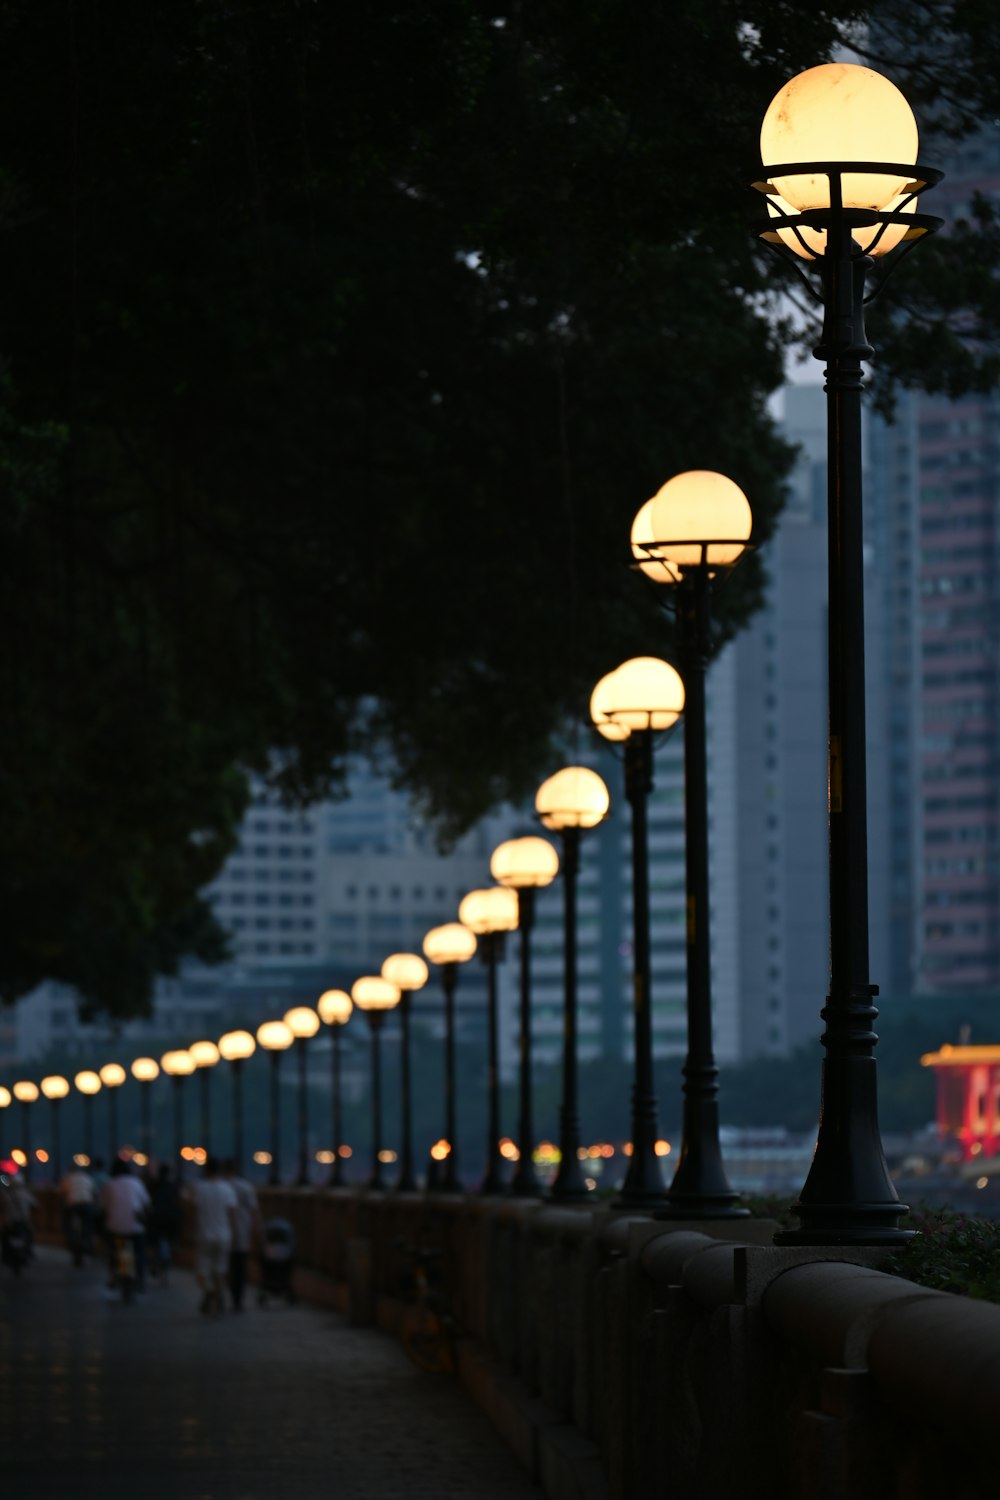 a row of street lights on a city street